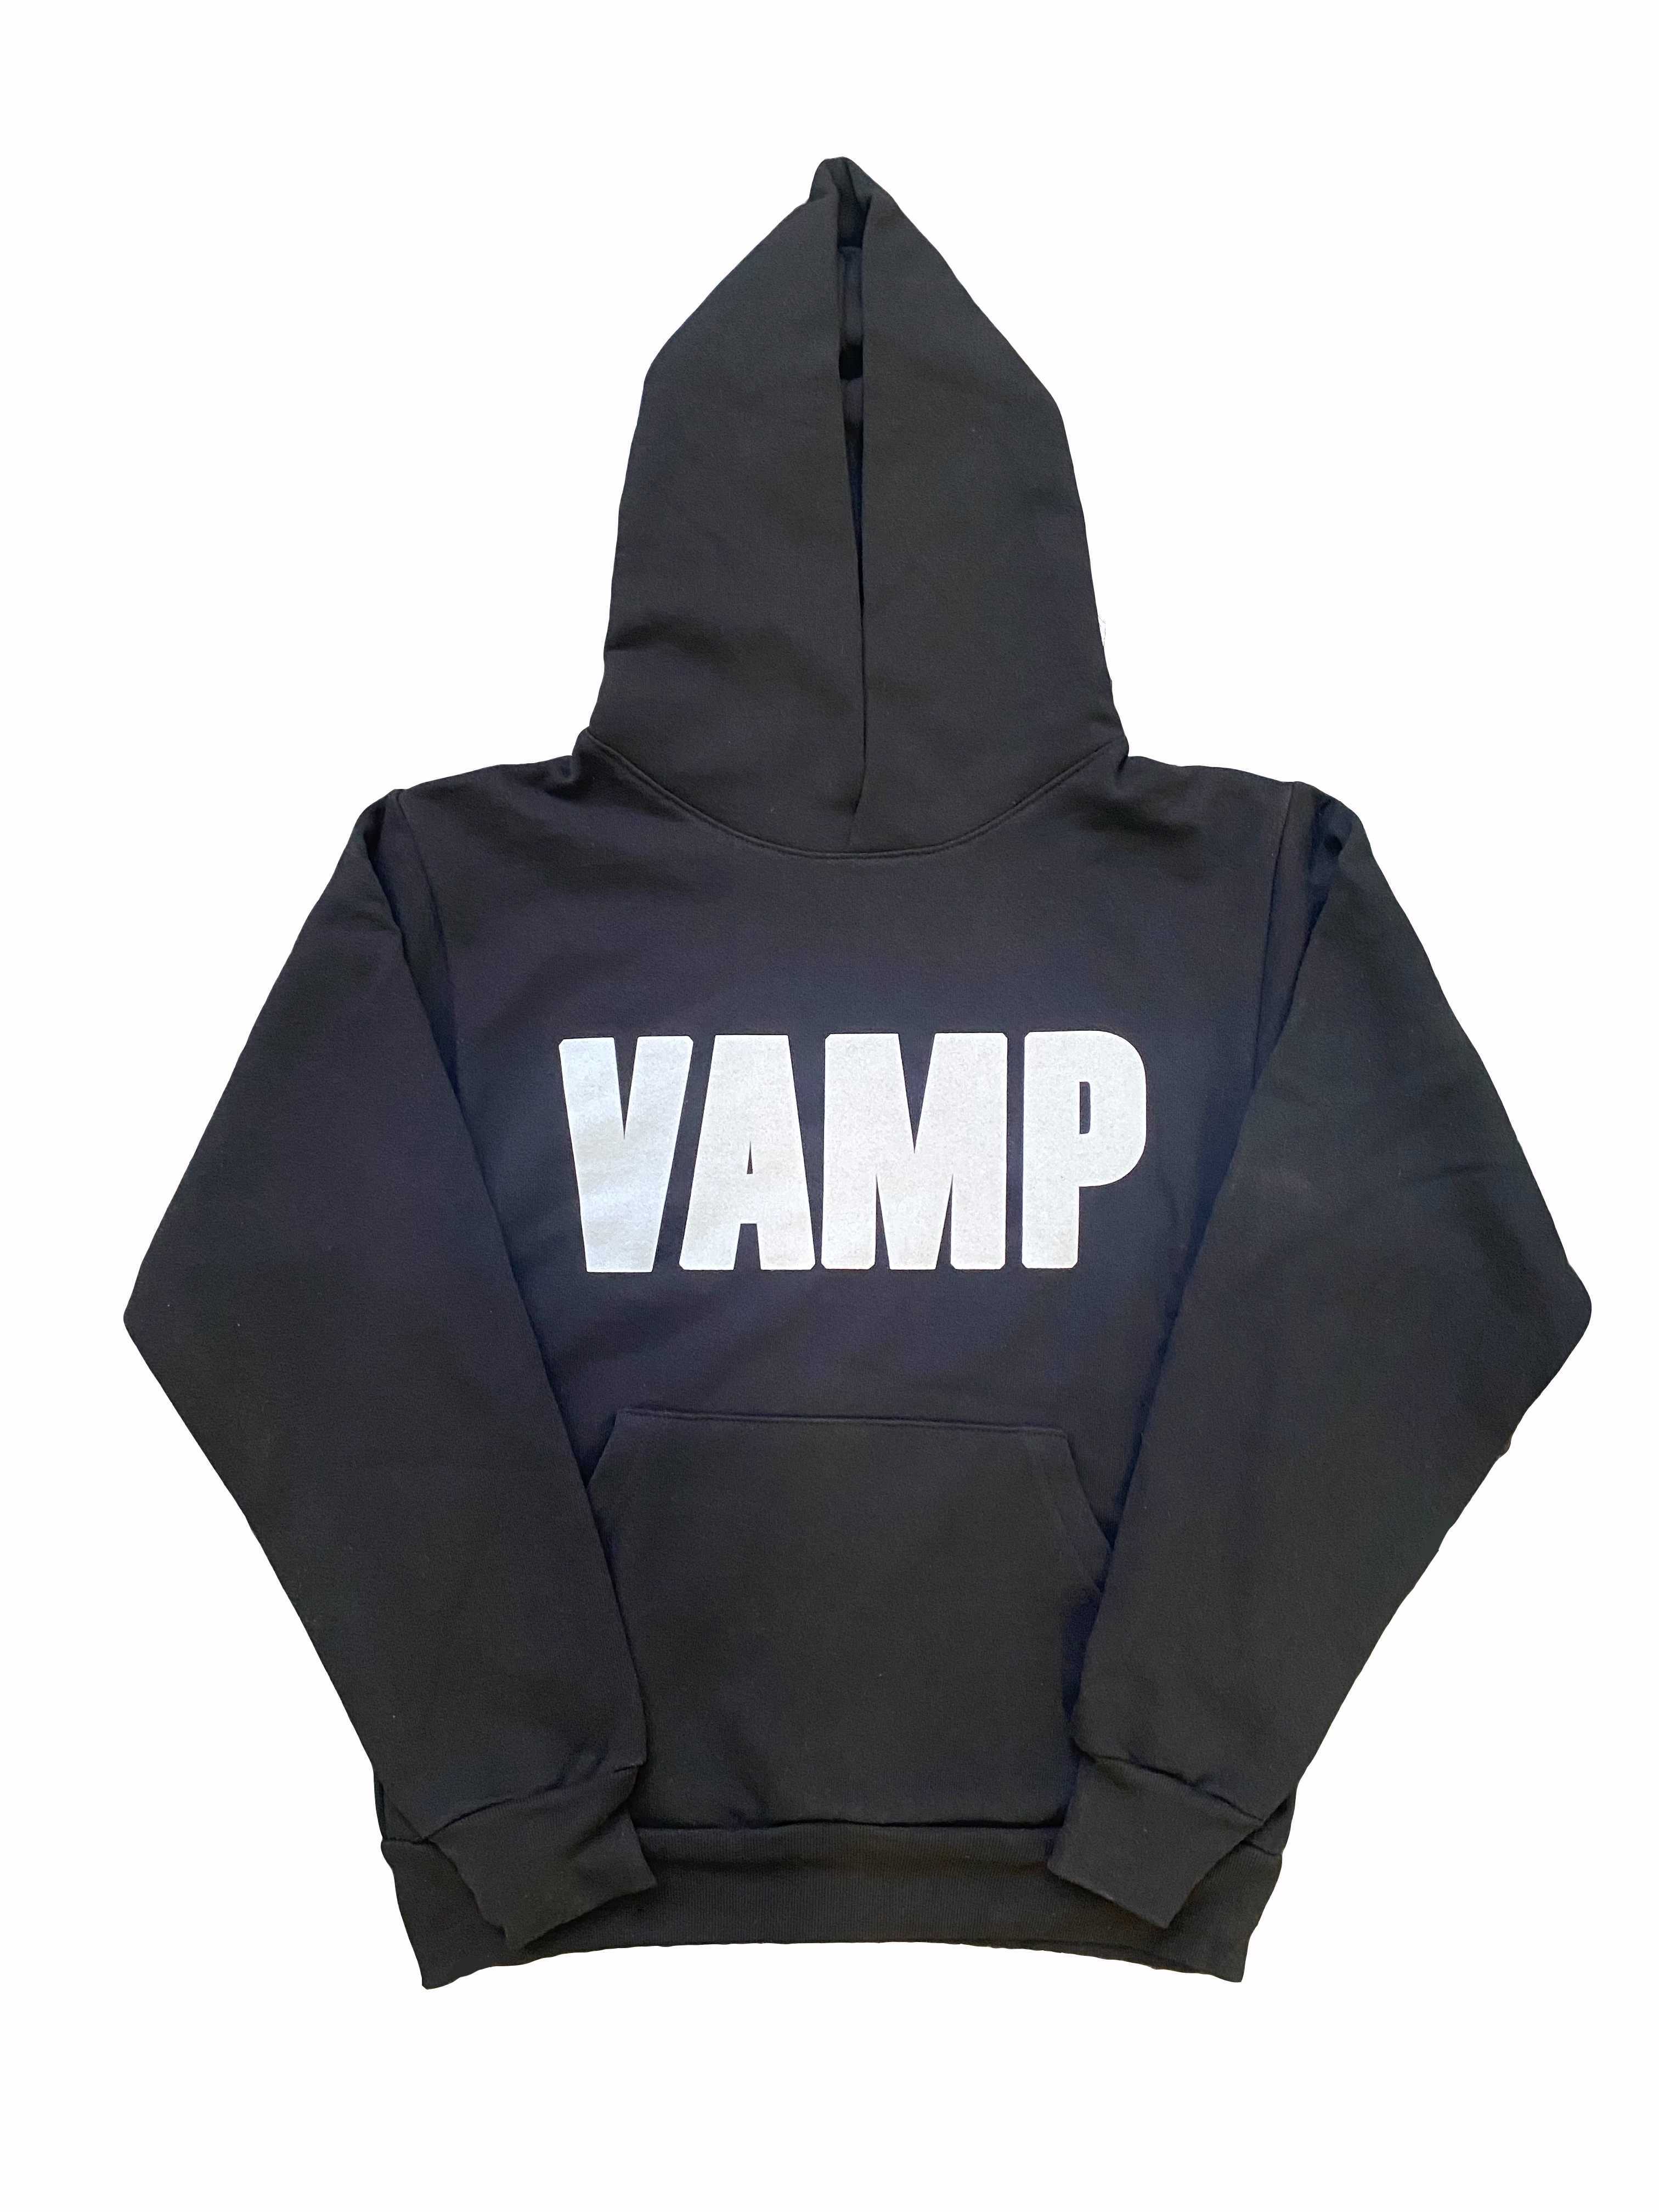 Playboi Carti Narcissist Tour Vamp Hoodie Black メンズ - FW21 - JP